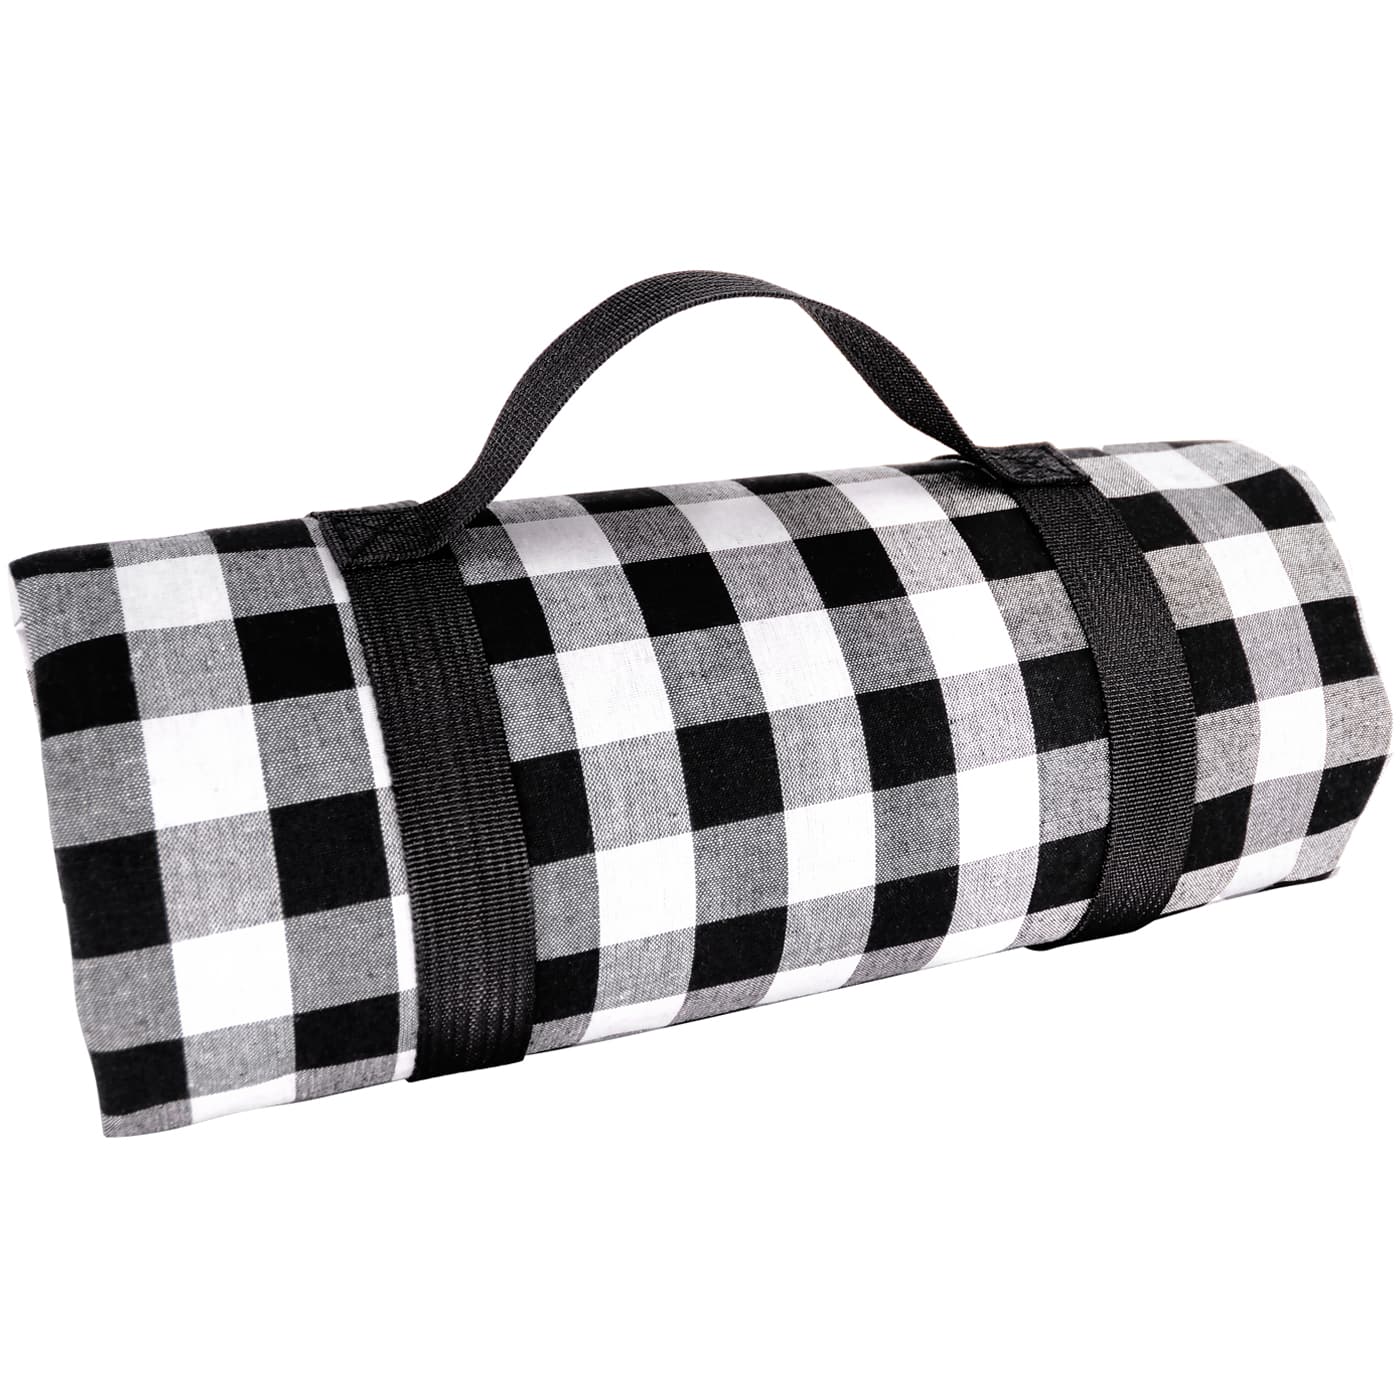 Waterproof picnic blanket Montaigne XL